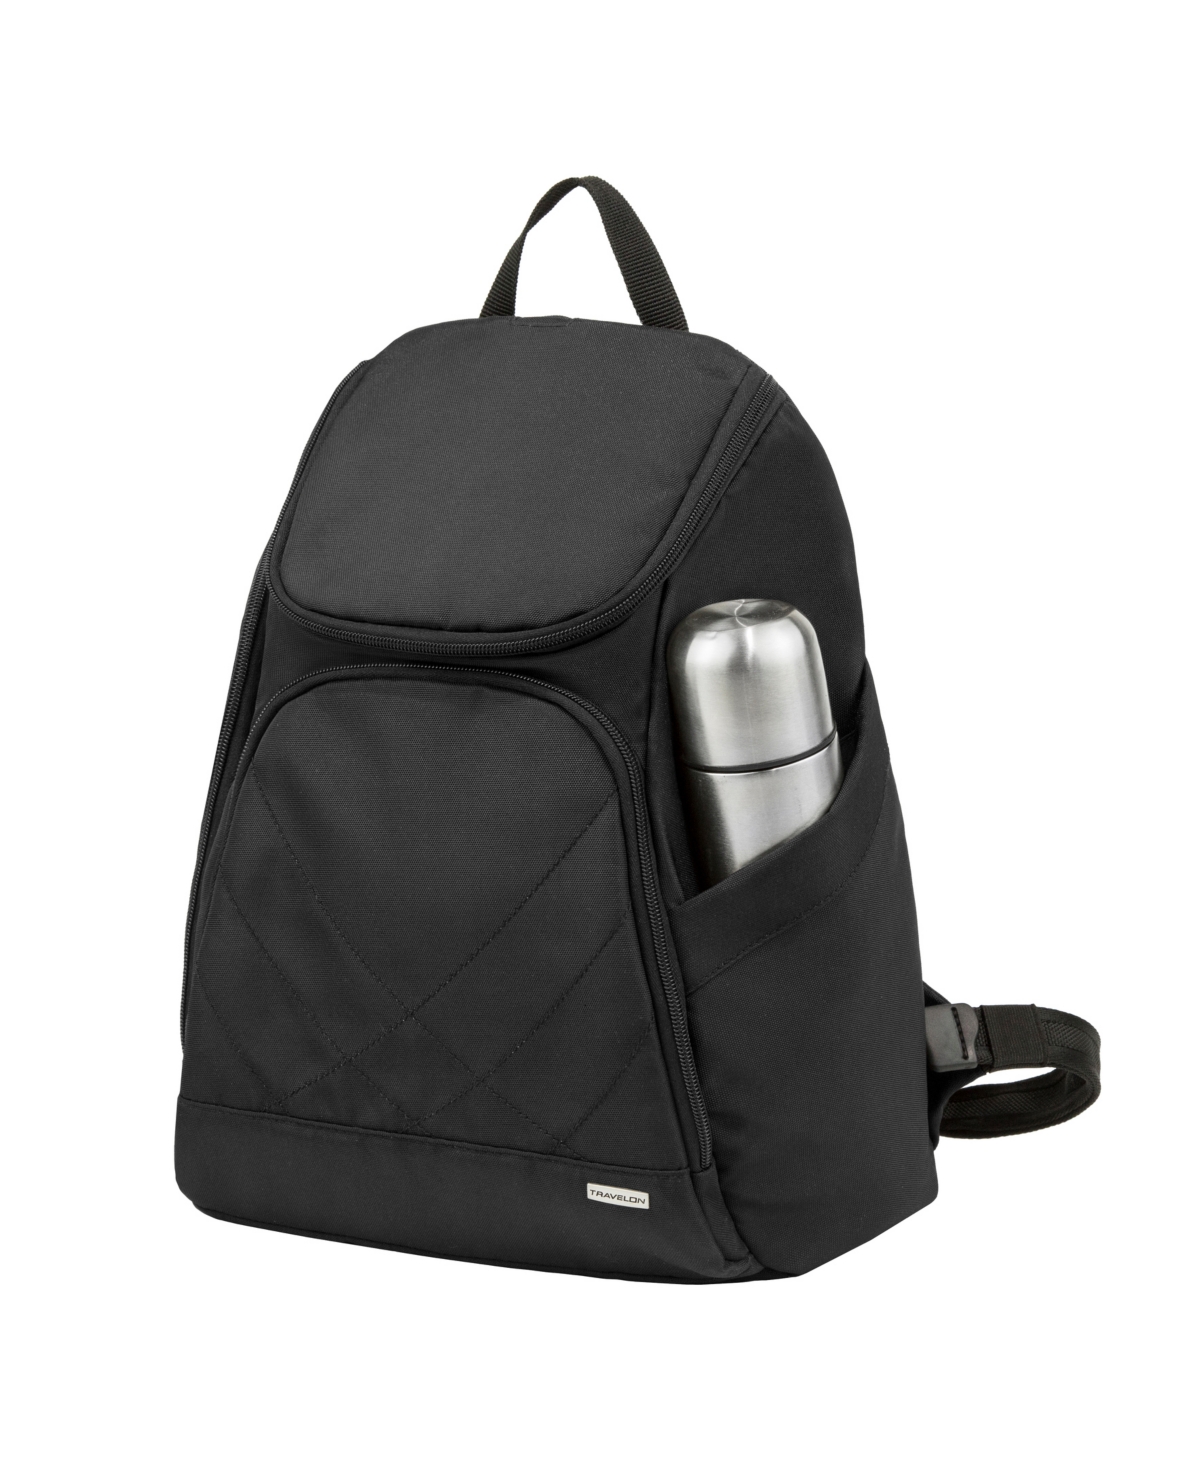 Travelon's Classic Anti-Theft Backpack - Dark Blue